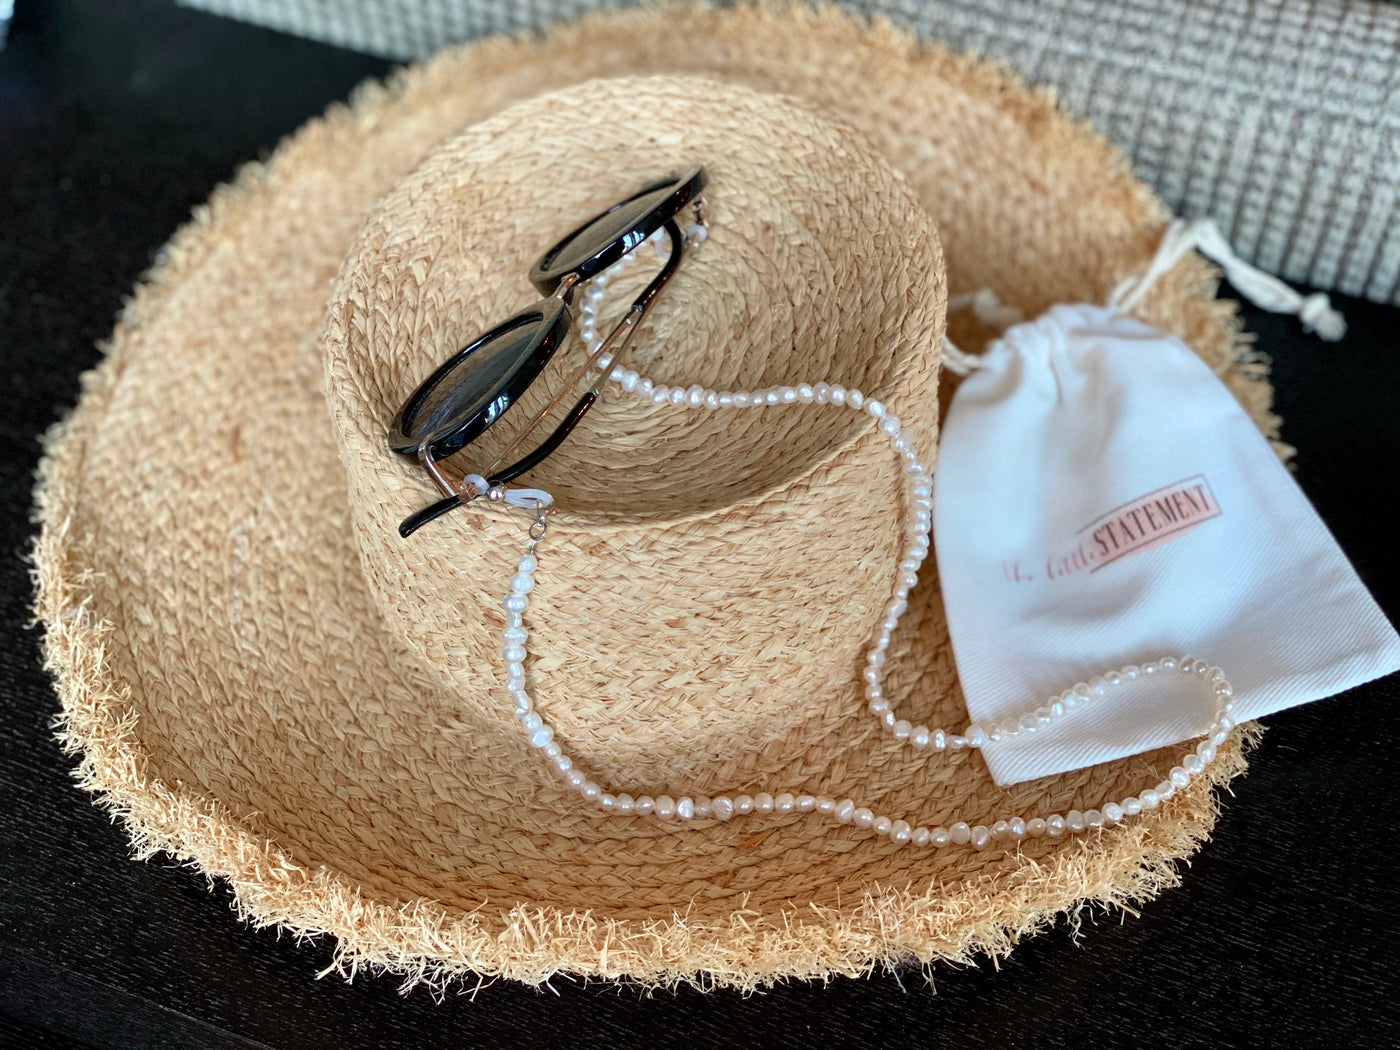 Süßwasserperlen-Sonnenband, Süßwasserperlen-Sonnenband, Sonnenbrillen-Perlenband